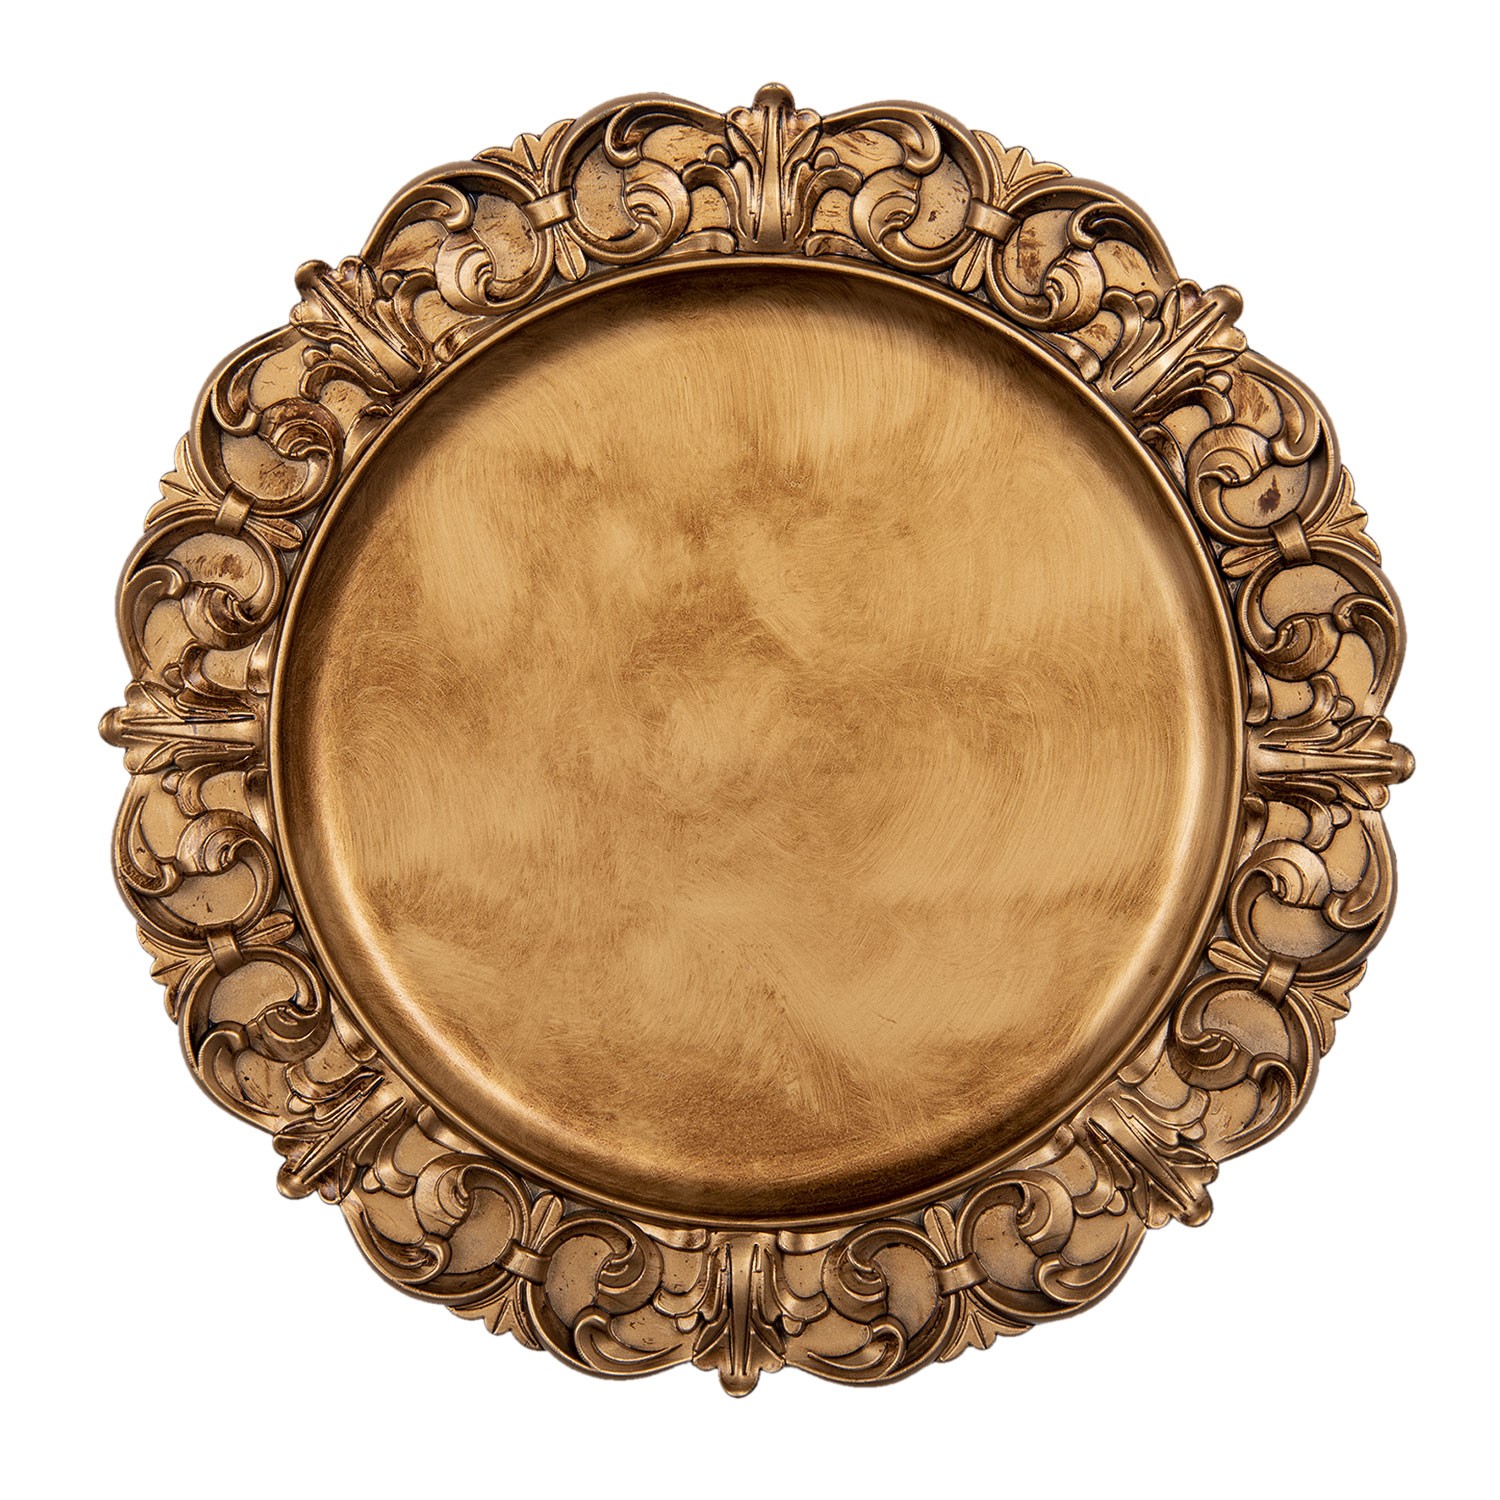 Zlato-hnědý plastový talíř s ornamenty - Ø 33*2 cm Clayre & Eef